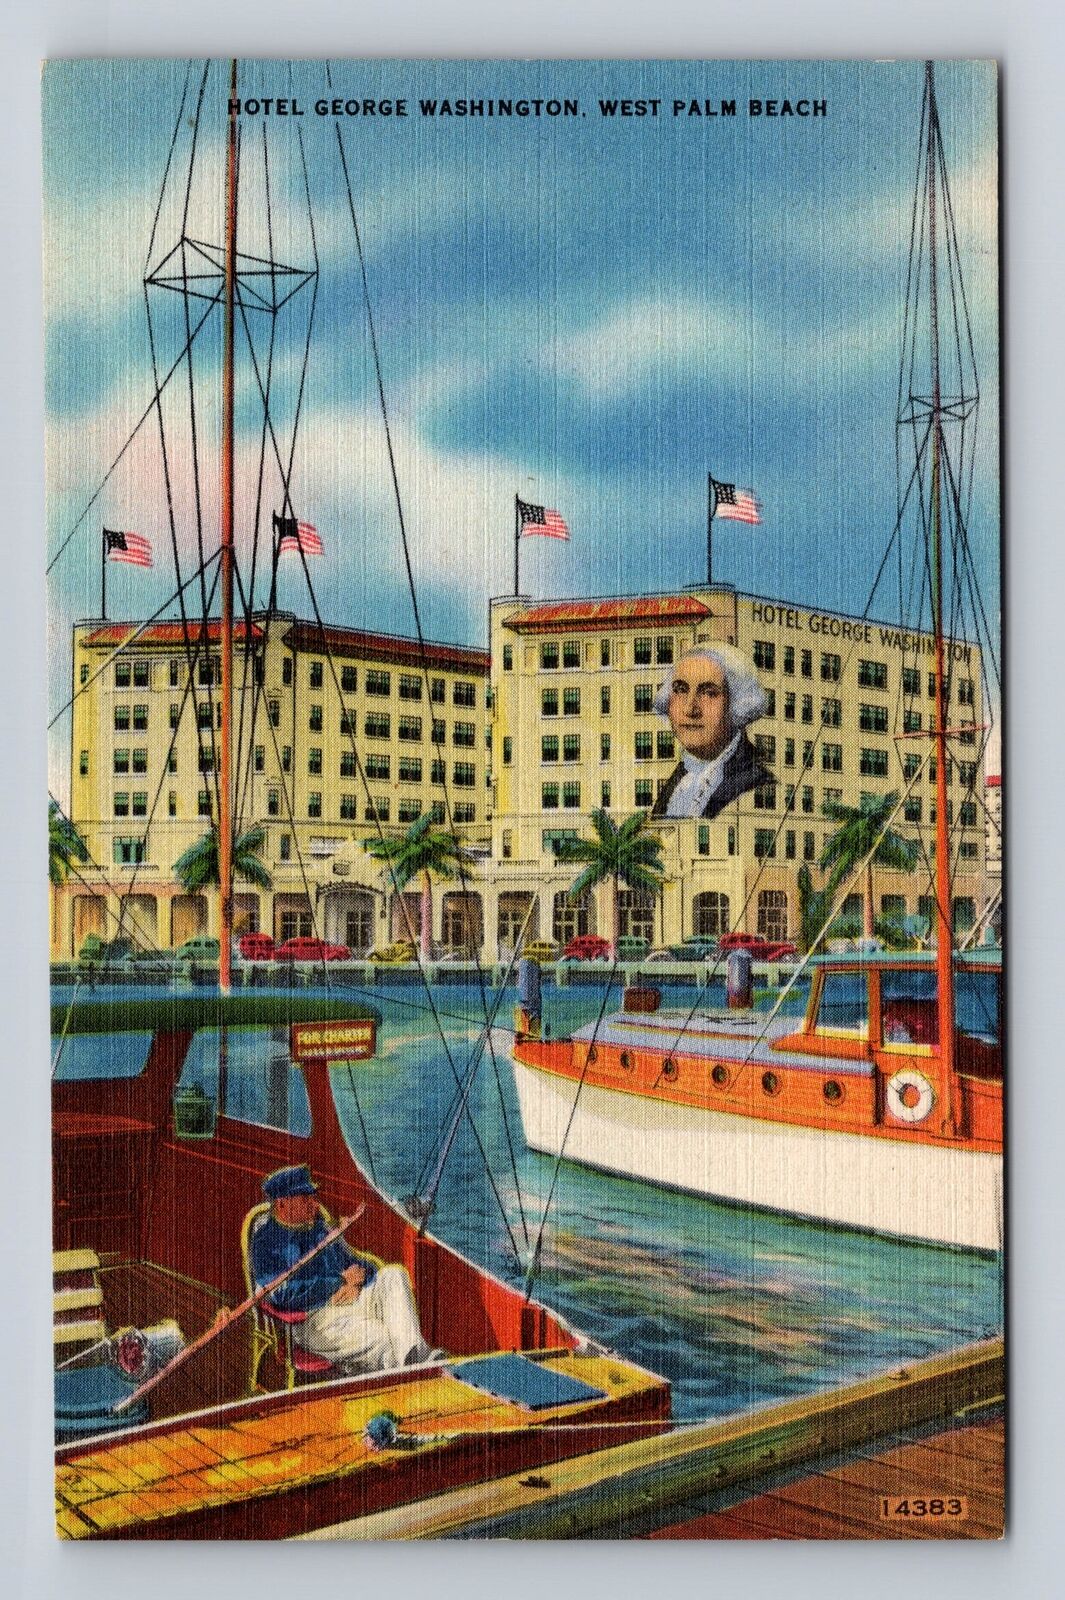 West Palm Beach FL-Florida, Hotel George Washington Advertising Vintage Postcard